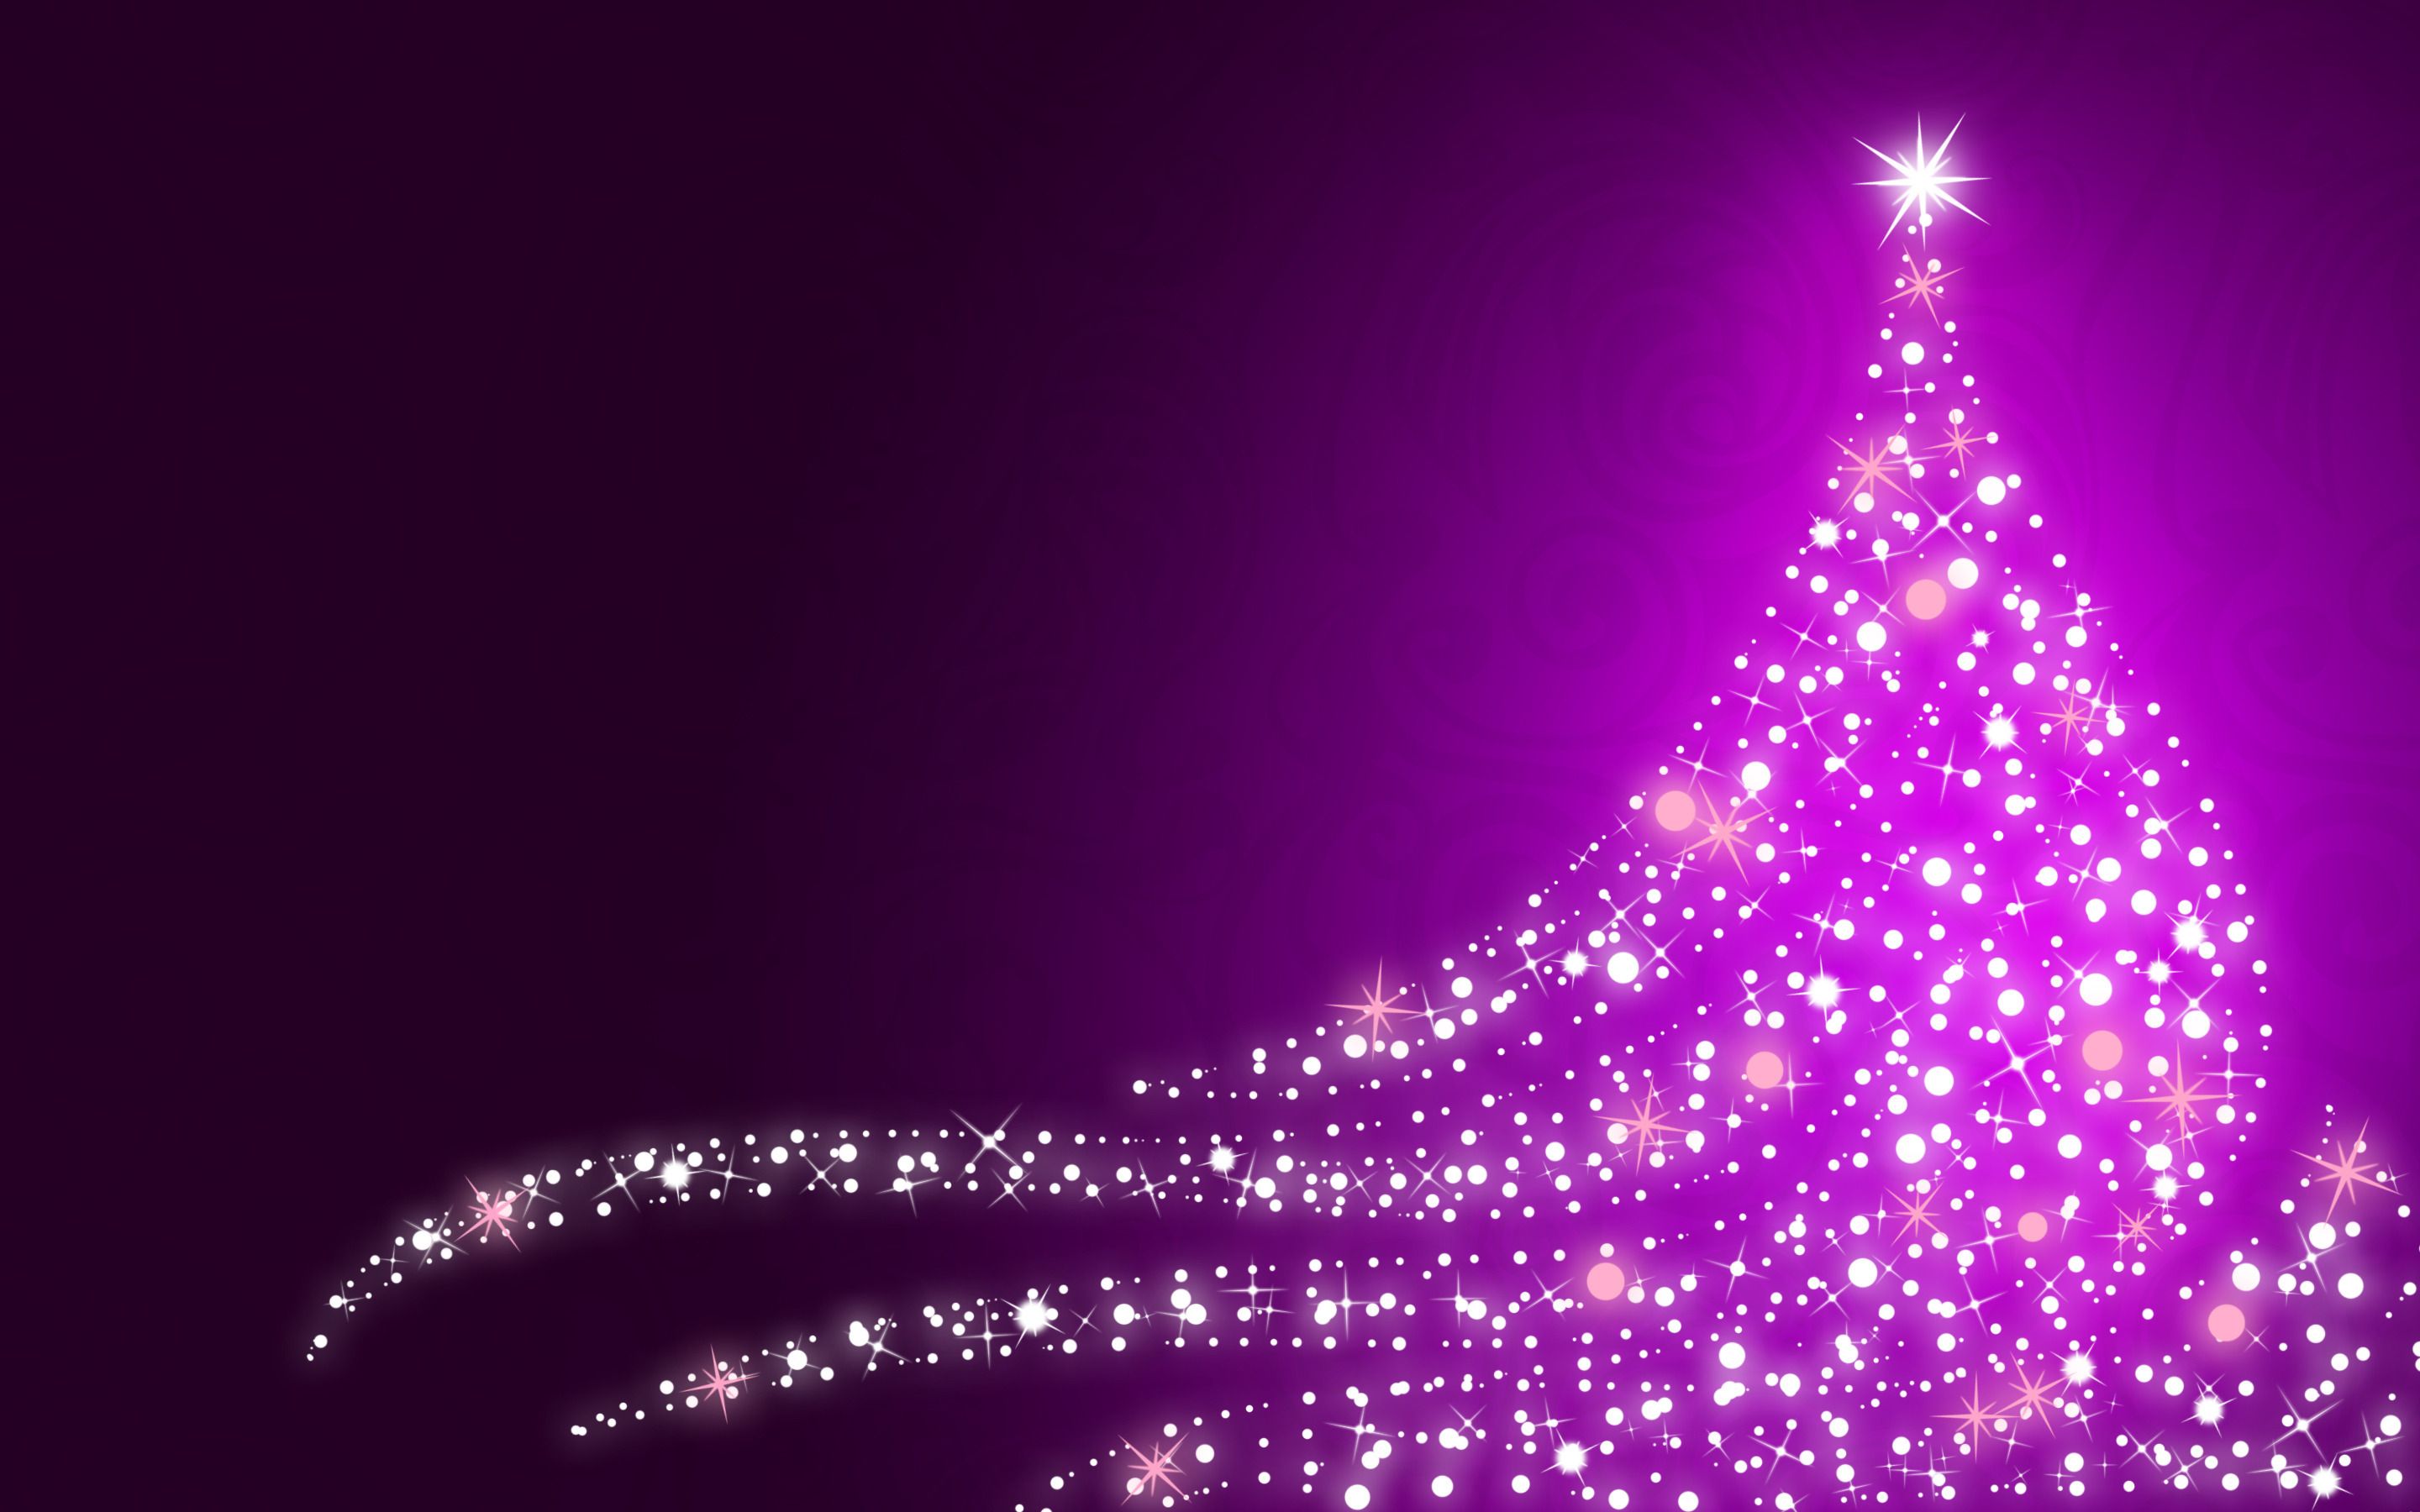 Christmas tree with stars on a dark background - Christmas lights